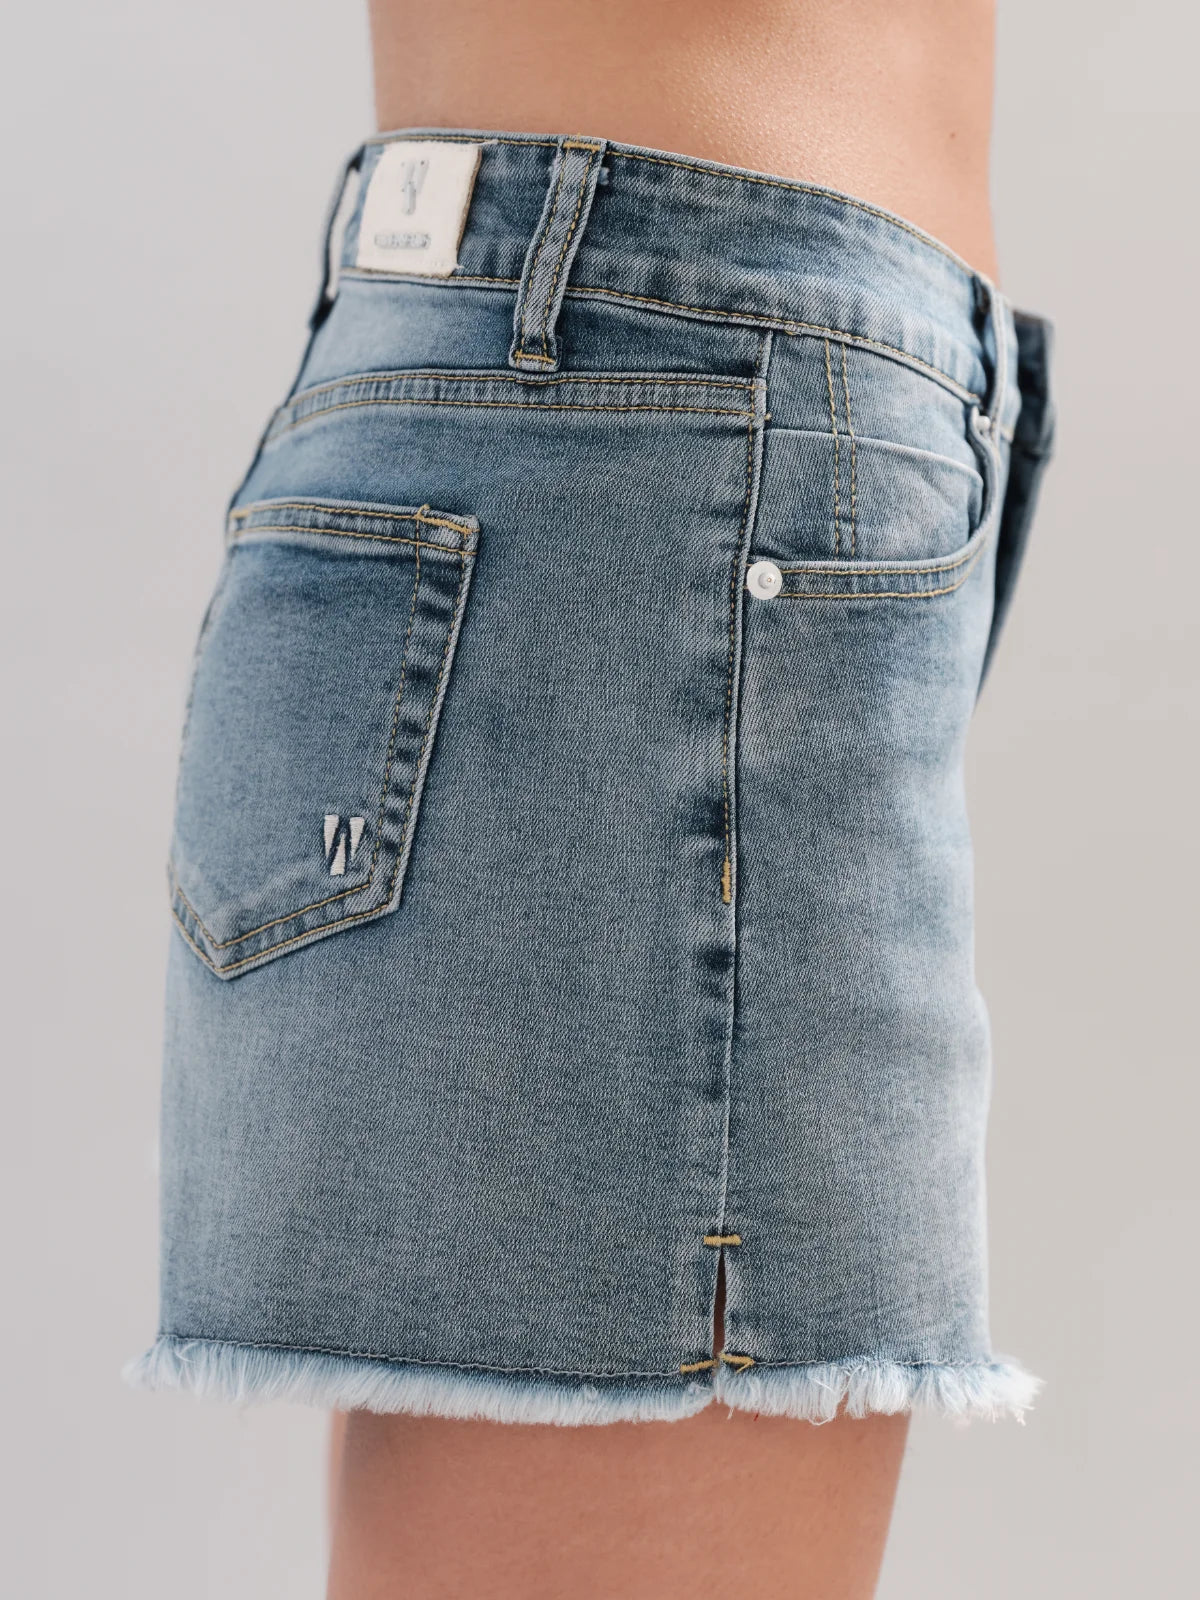 Shorts in Denim / Jeans - Ideal Moda